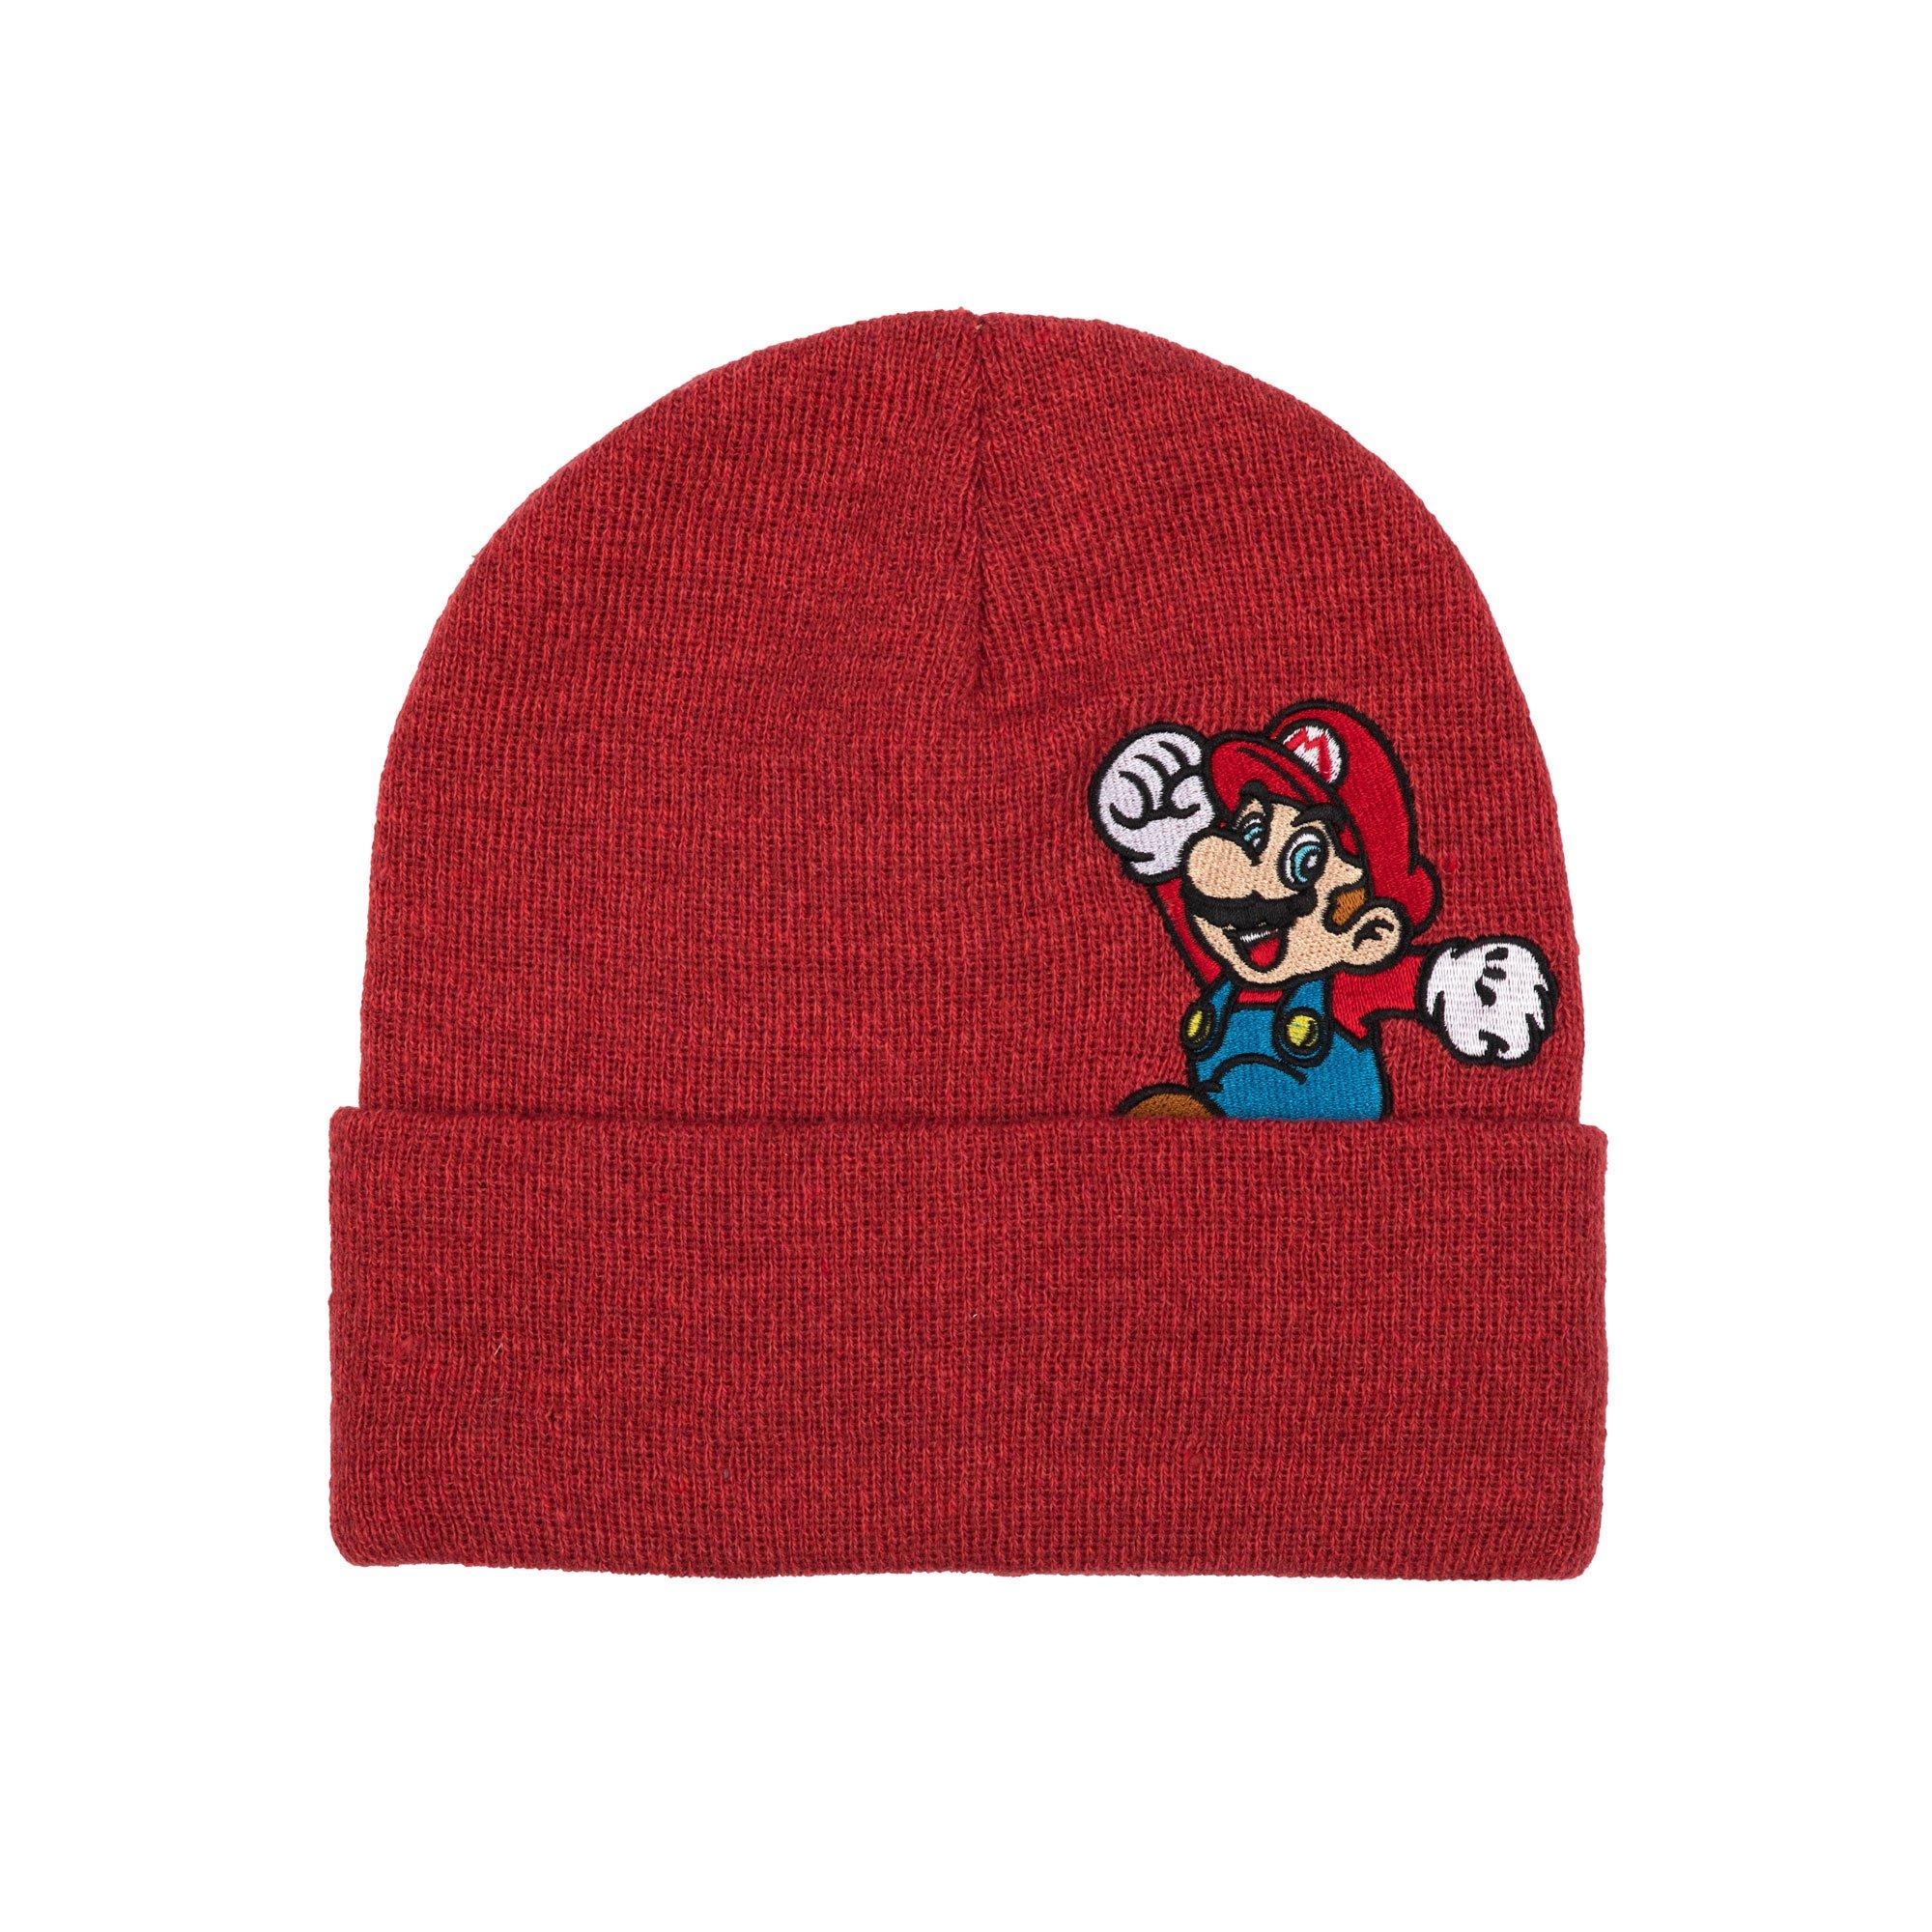 Super Mario Embroidered Peekaboo Knit Hat